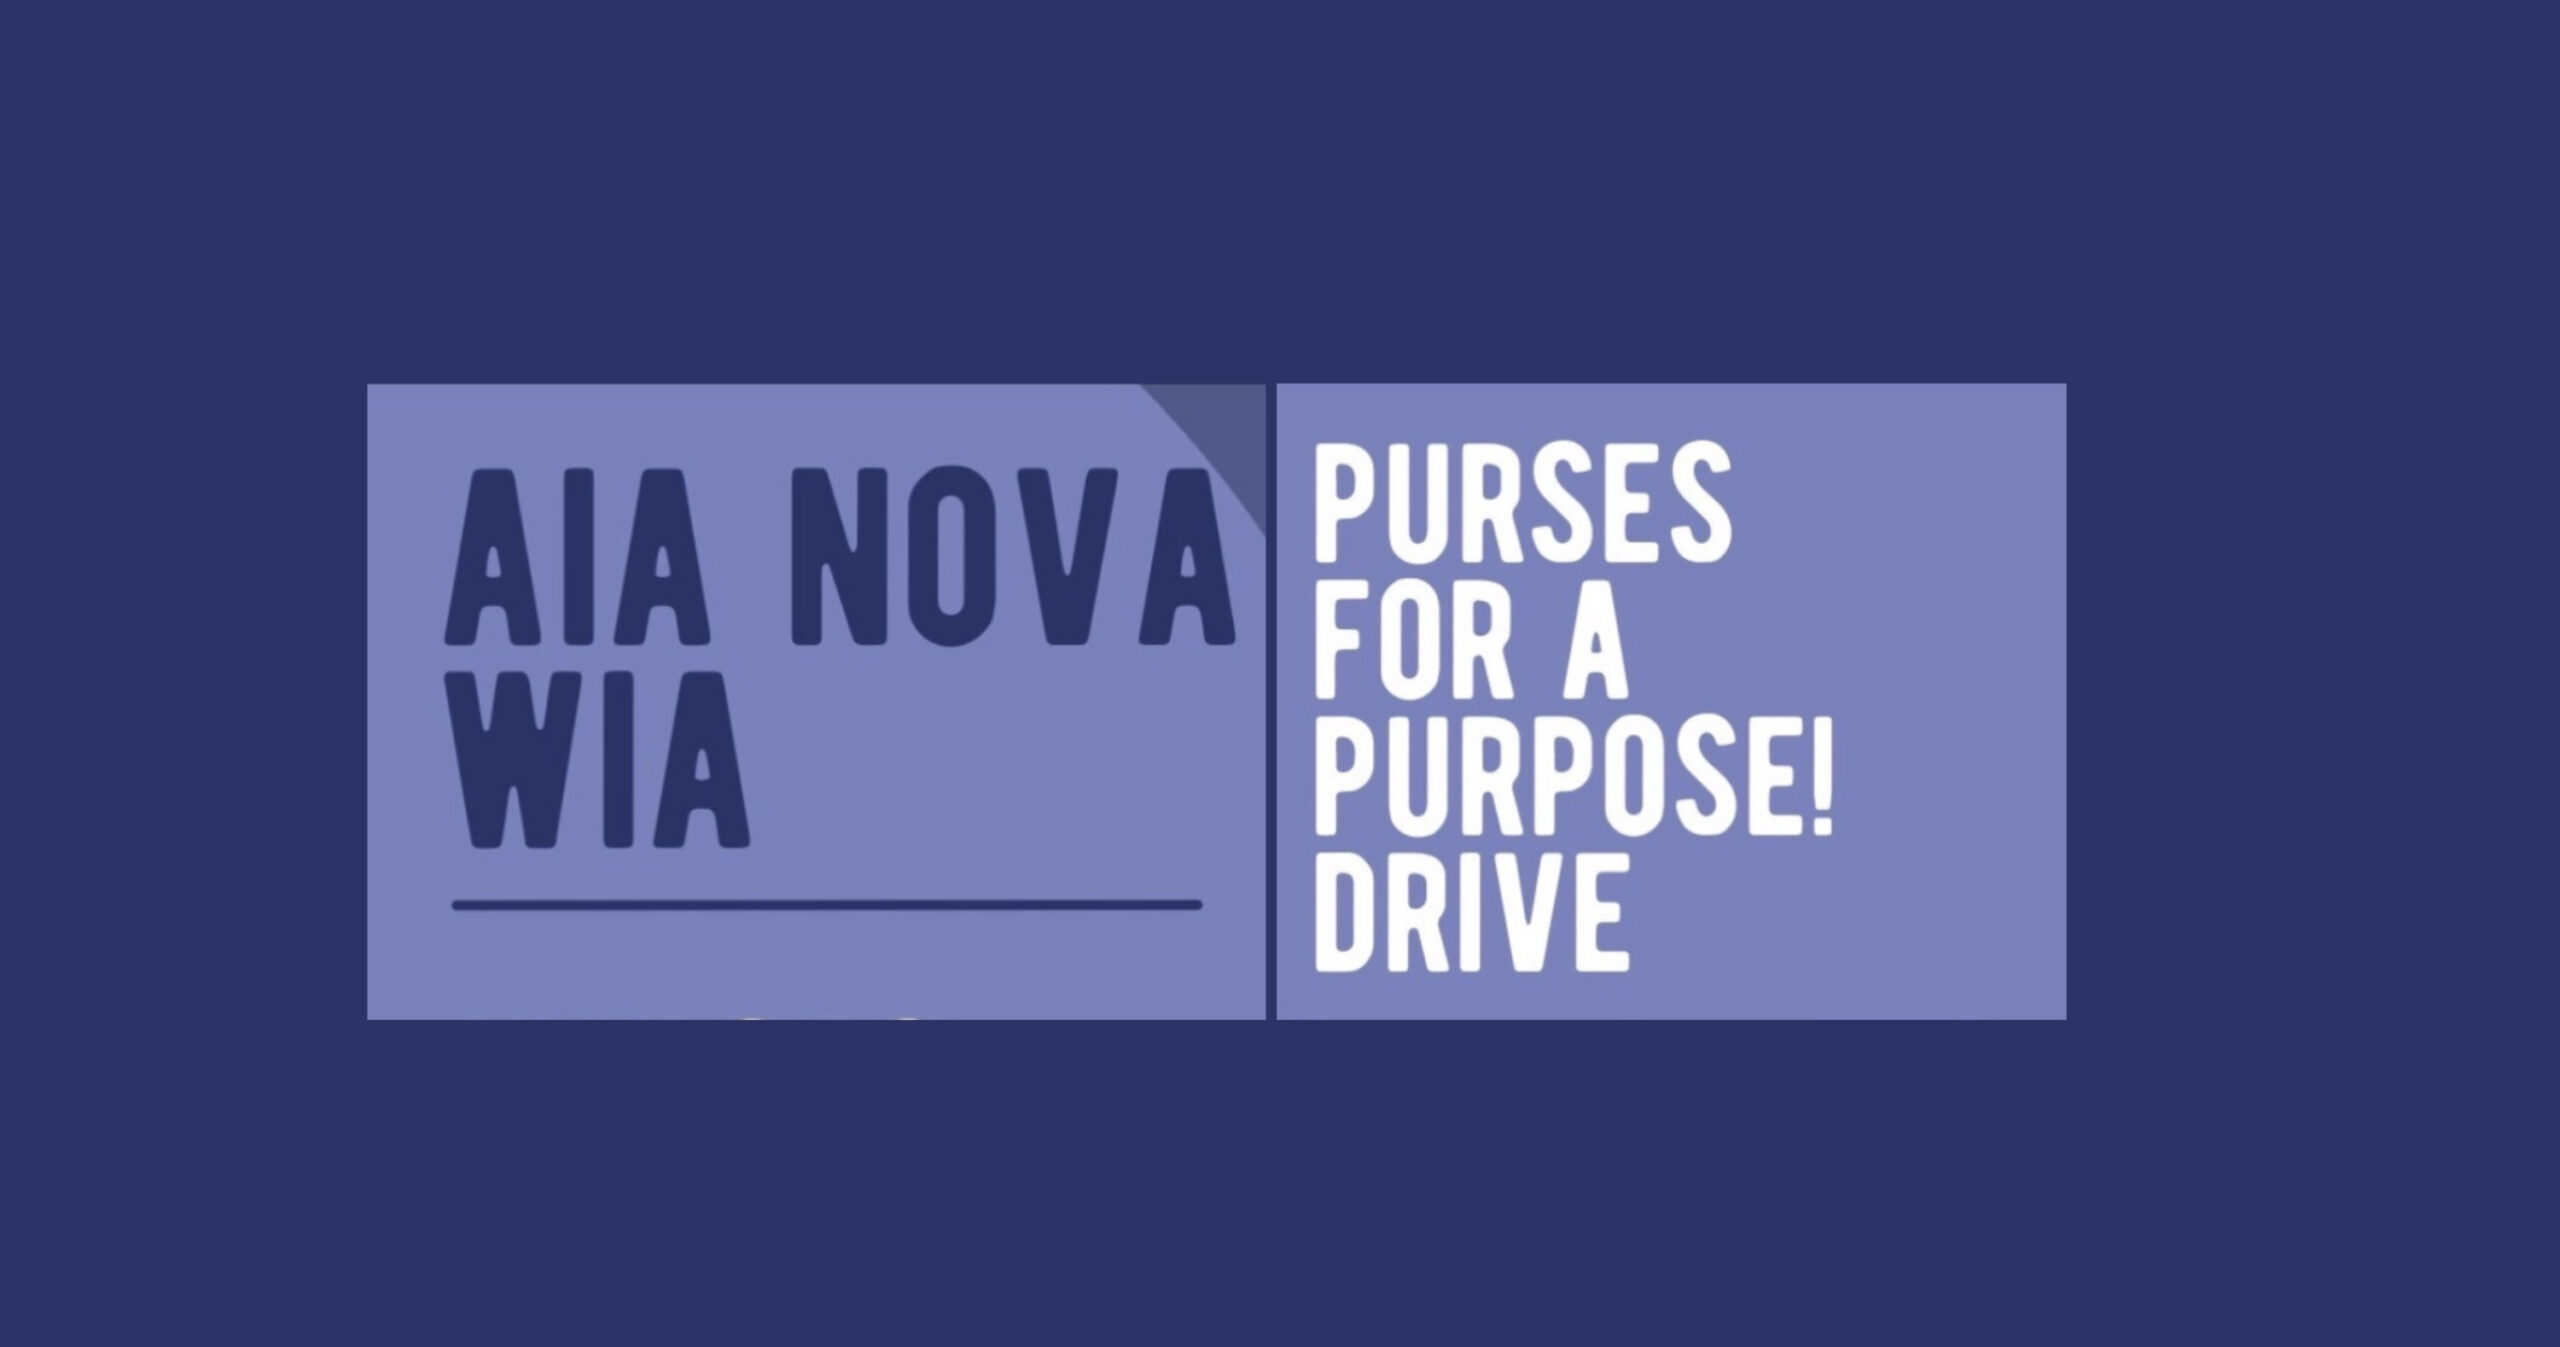 RDC Collaborating with AIA NOVA WIA for Purses for a Purpose Drive